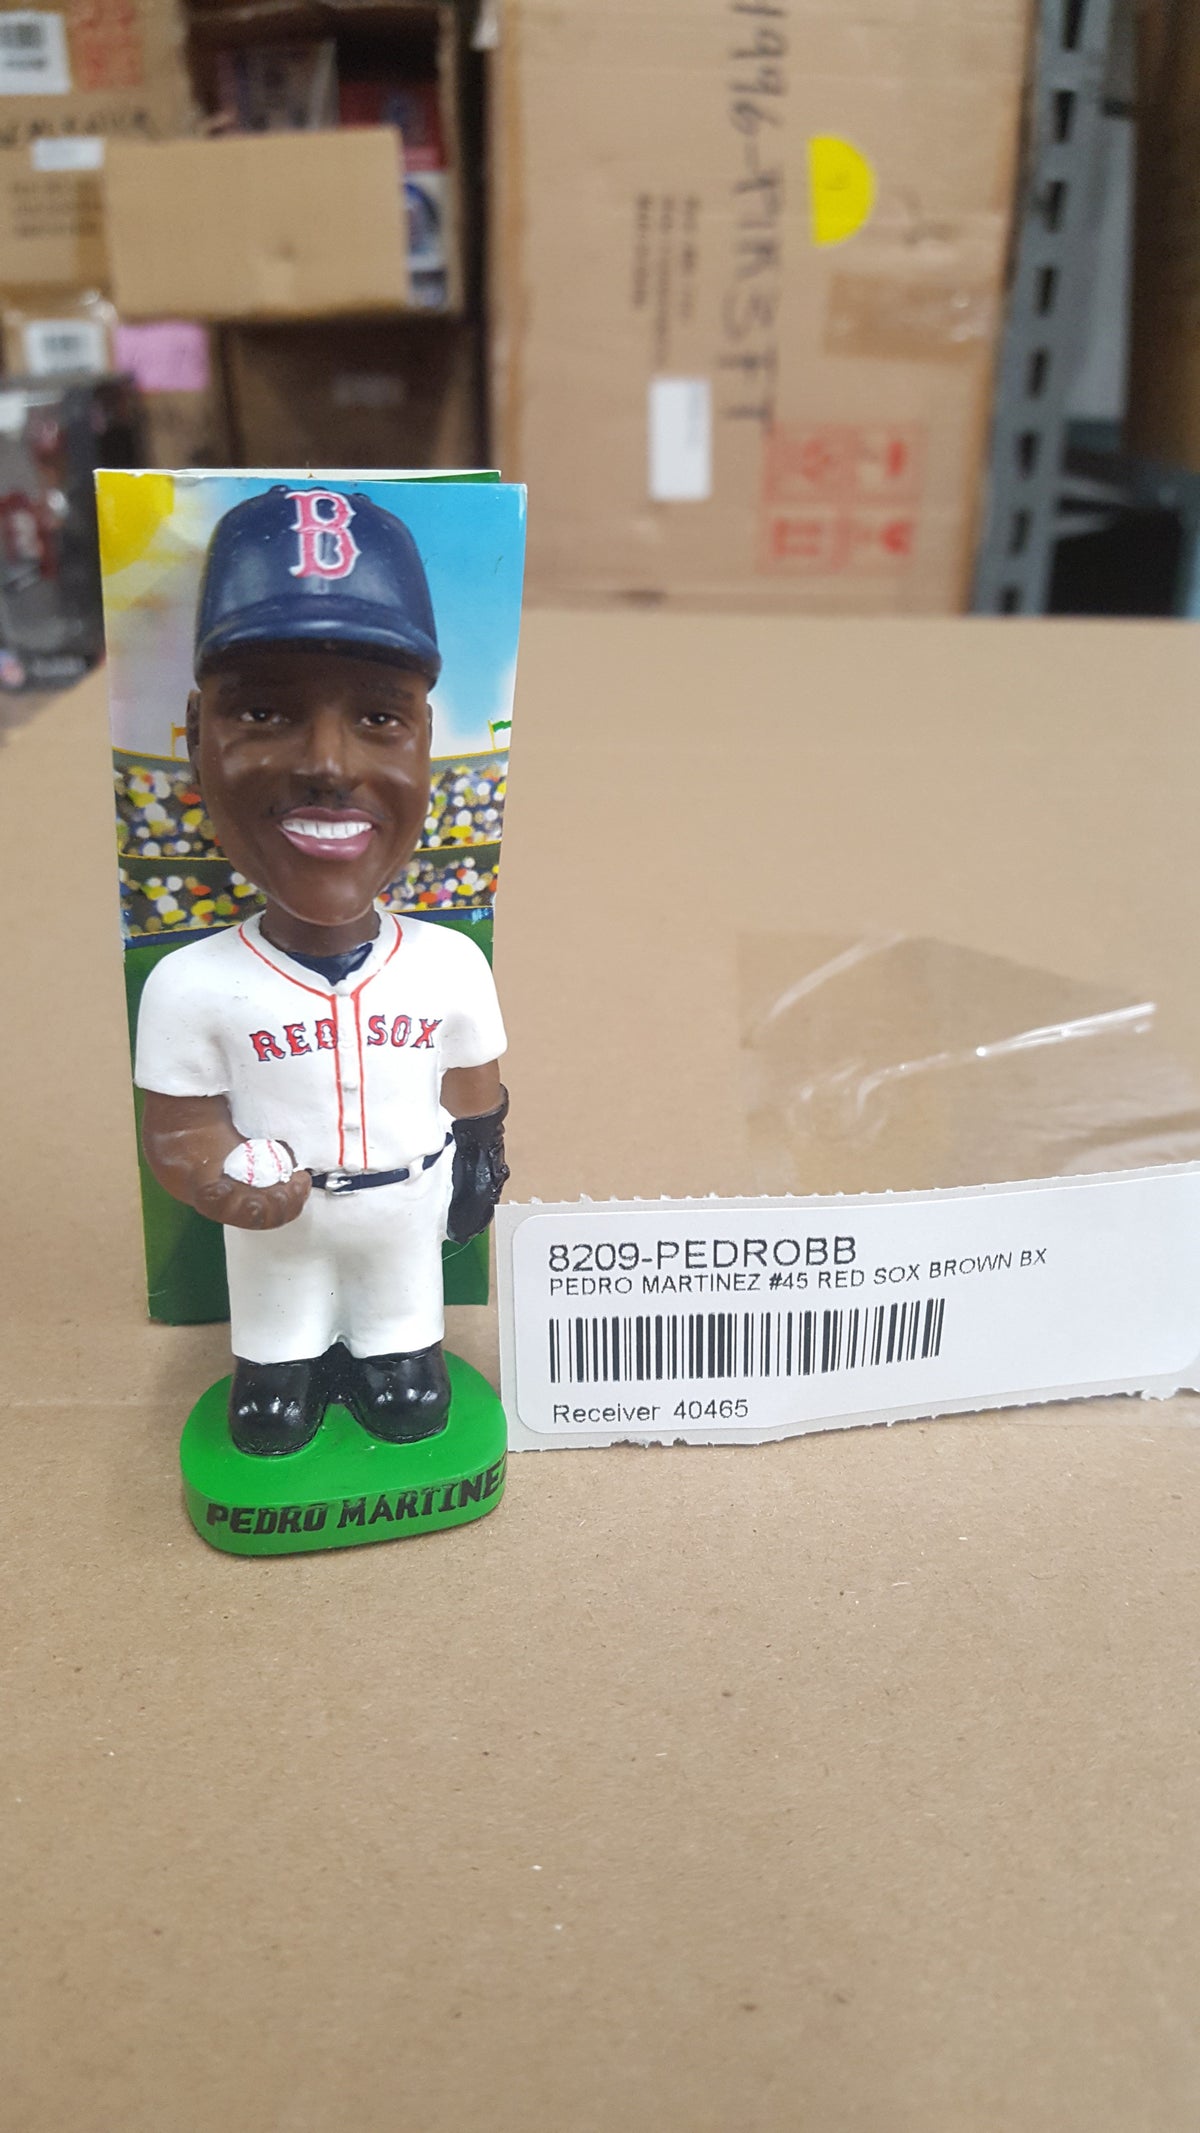 Pedro Martinez #45 Red Sox Brown BX Bobblehead